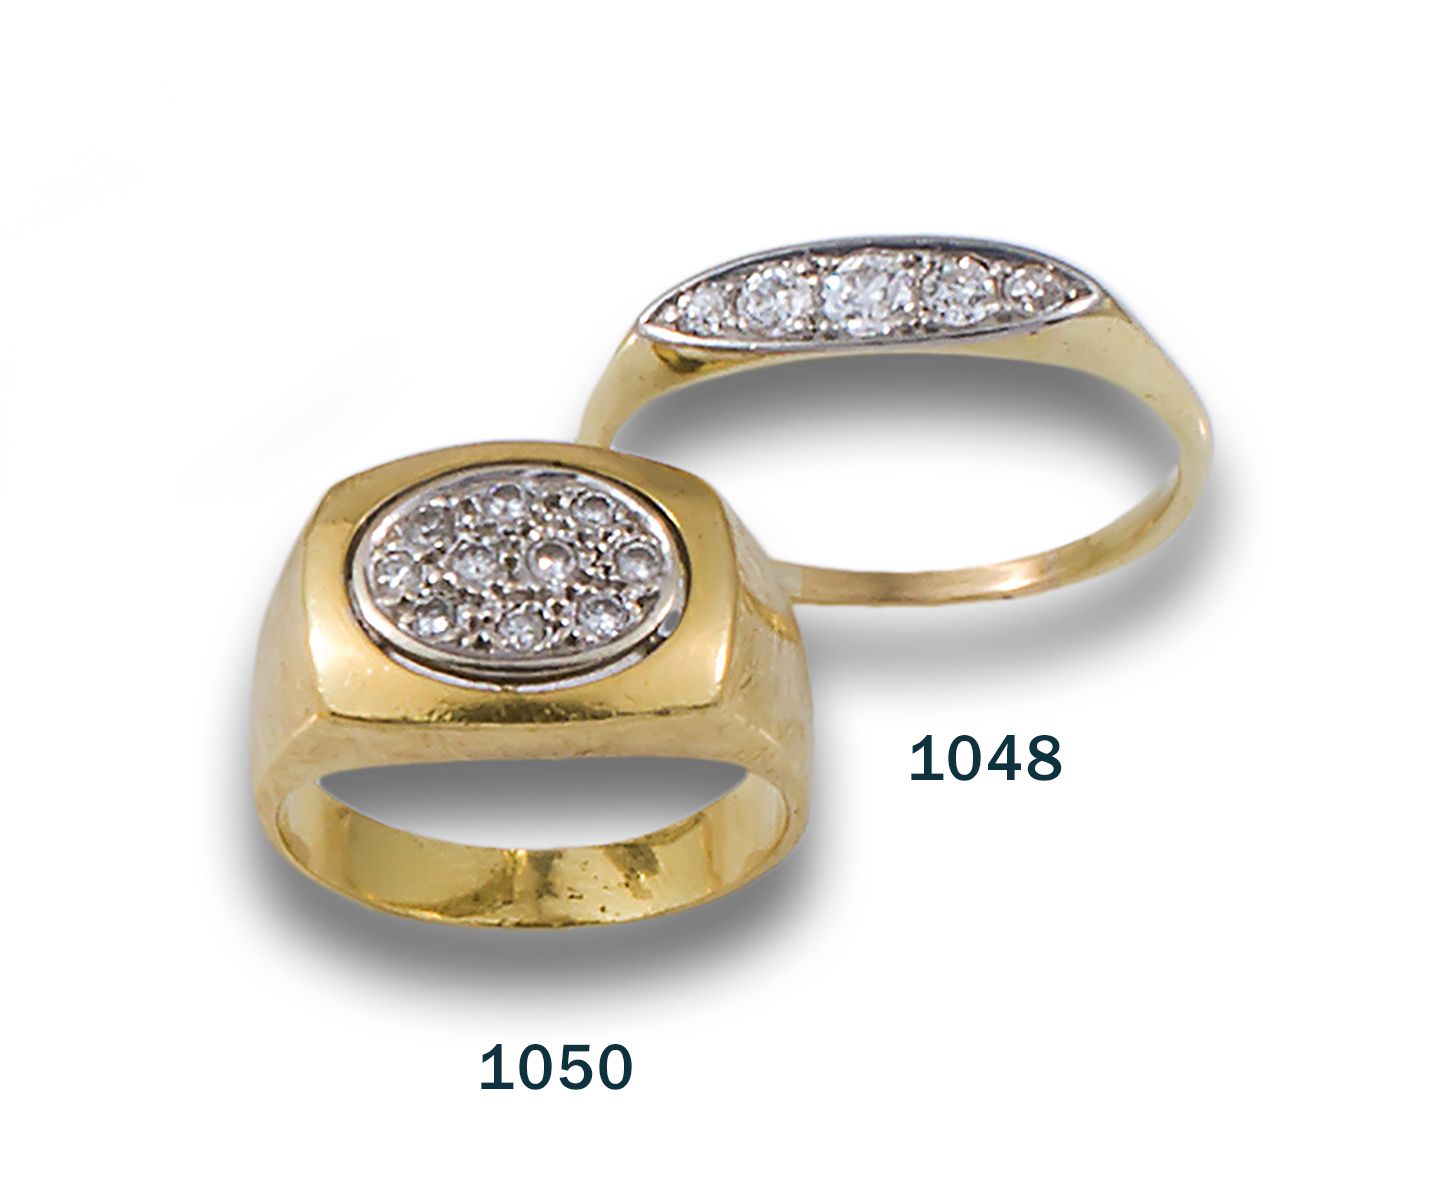 HALLMARK BRILLIANT-CUT DIAMONDS, YELLOW GOLD 18K黄金戒指，中央镶嵌明亮式切割钻石，估计重量为0.30克拉。